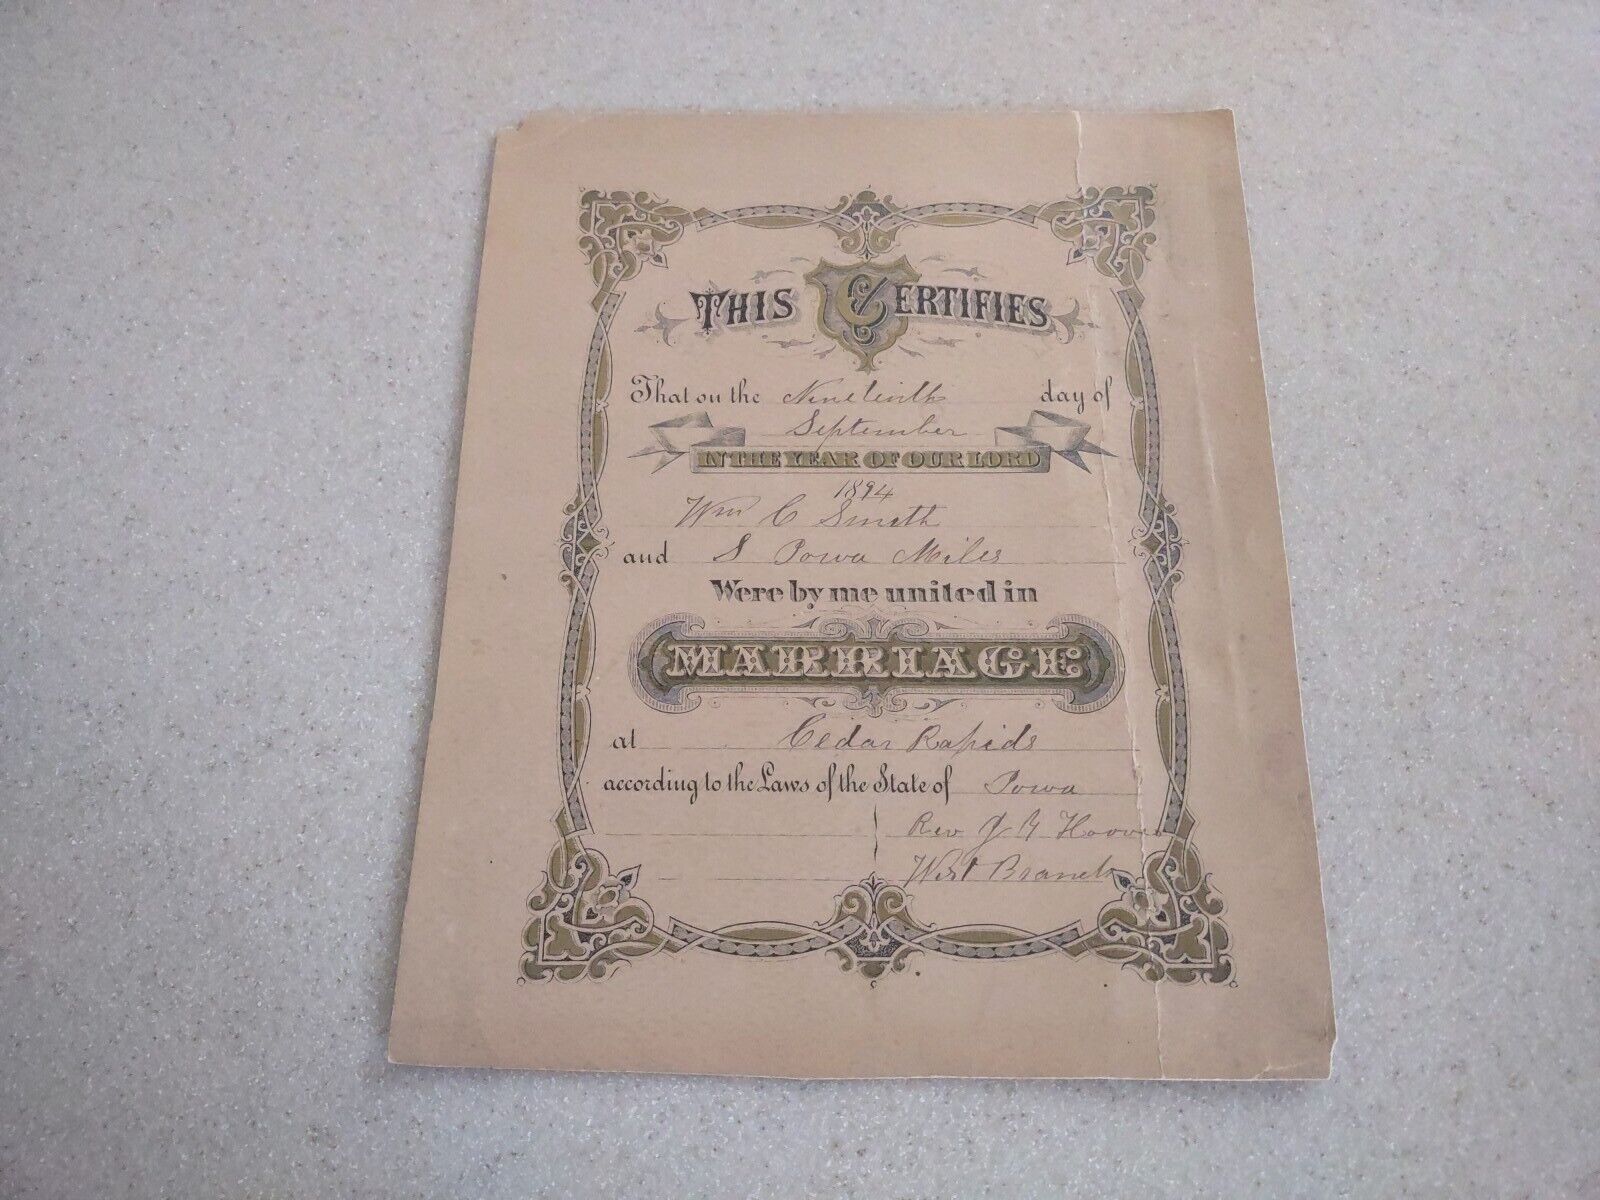 ORIGINAL VINTAGE 1894 MARRIAGE CERTIFICATE FROM CEDAR RAPIDS IOWA